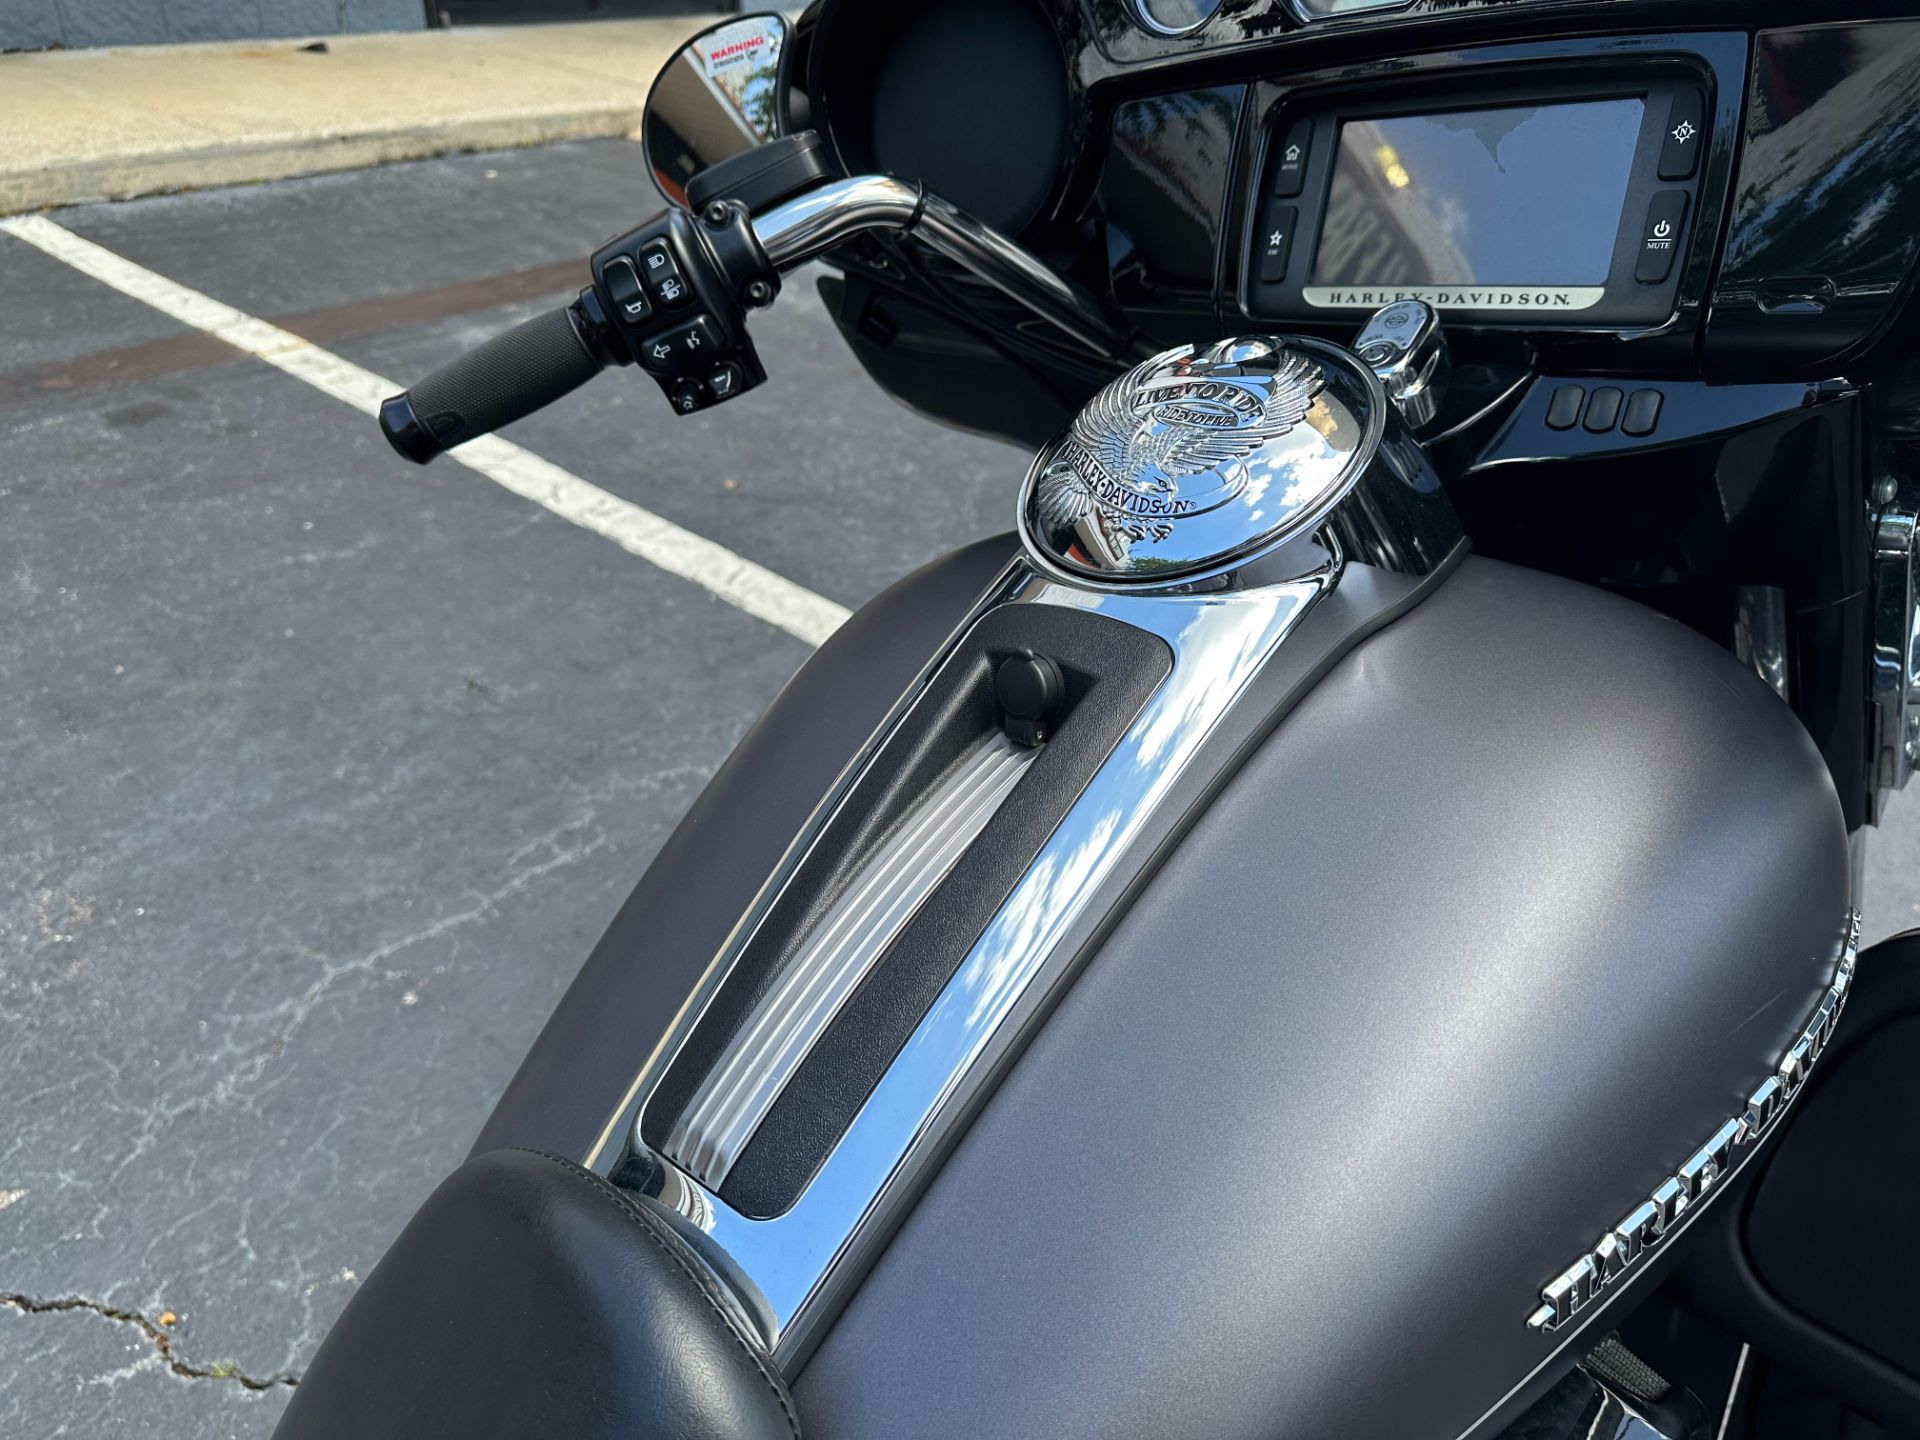 2017 Harley-Davidson Ultra Limited Low in Mobile, Alabama - Photo 12